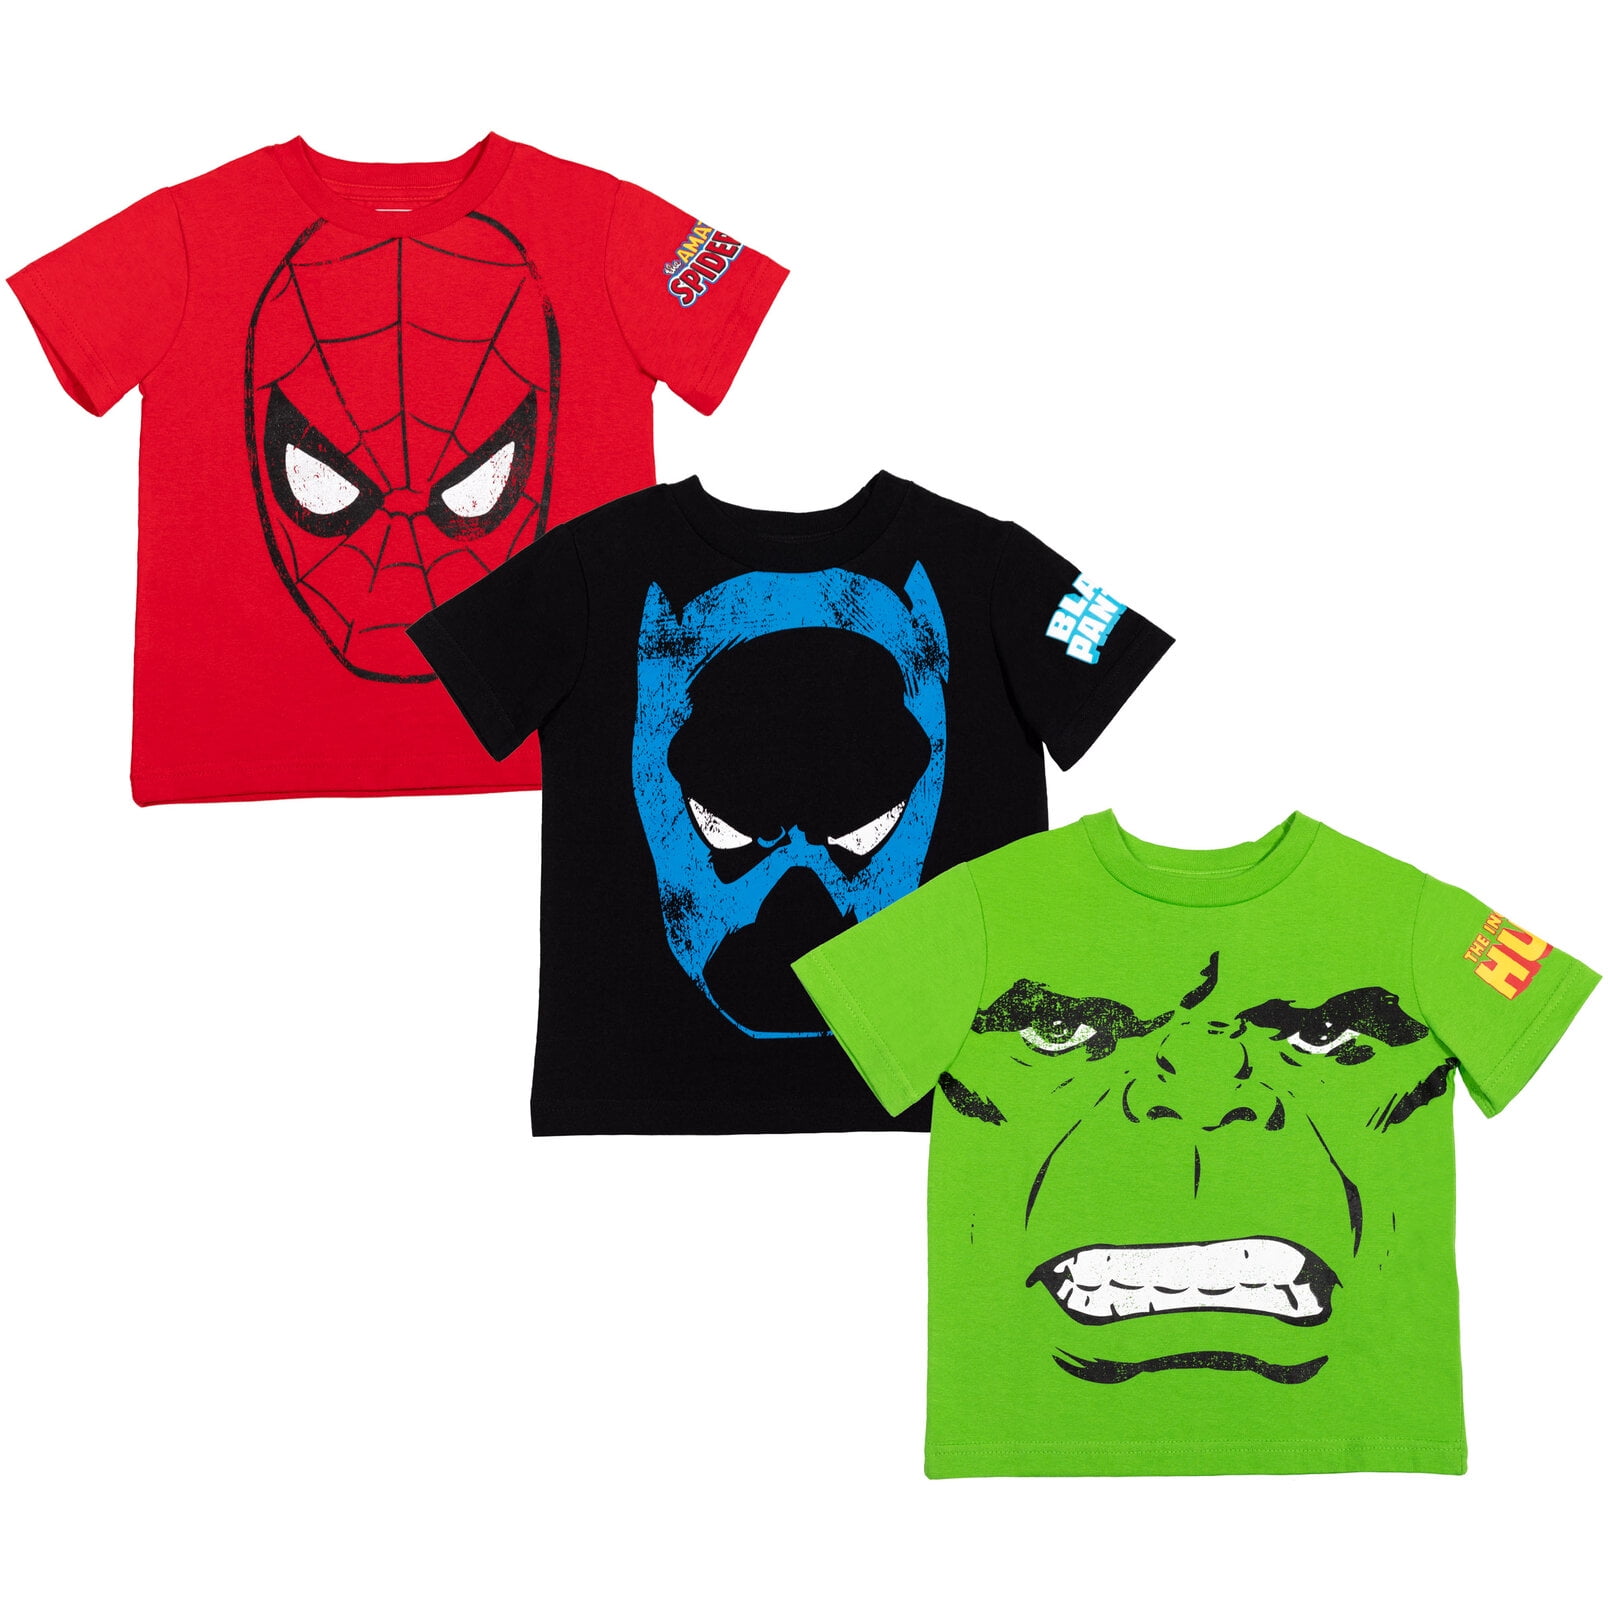 Spiderman Kids Clothes Shirt  Marvel Spiderman Shirt Child